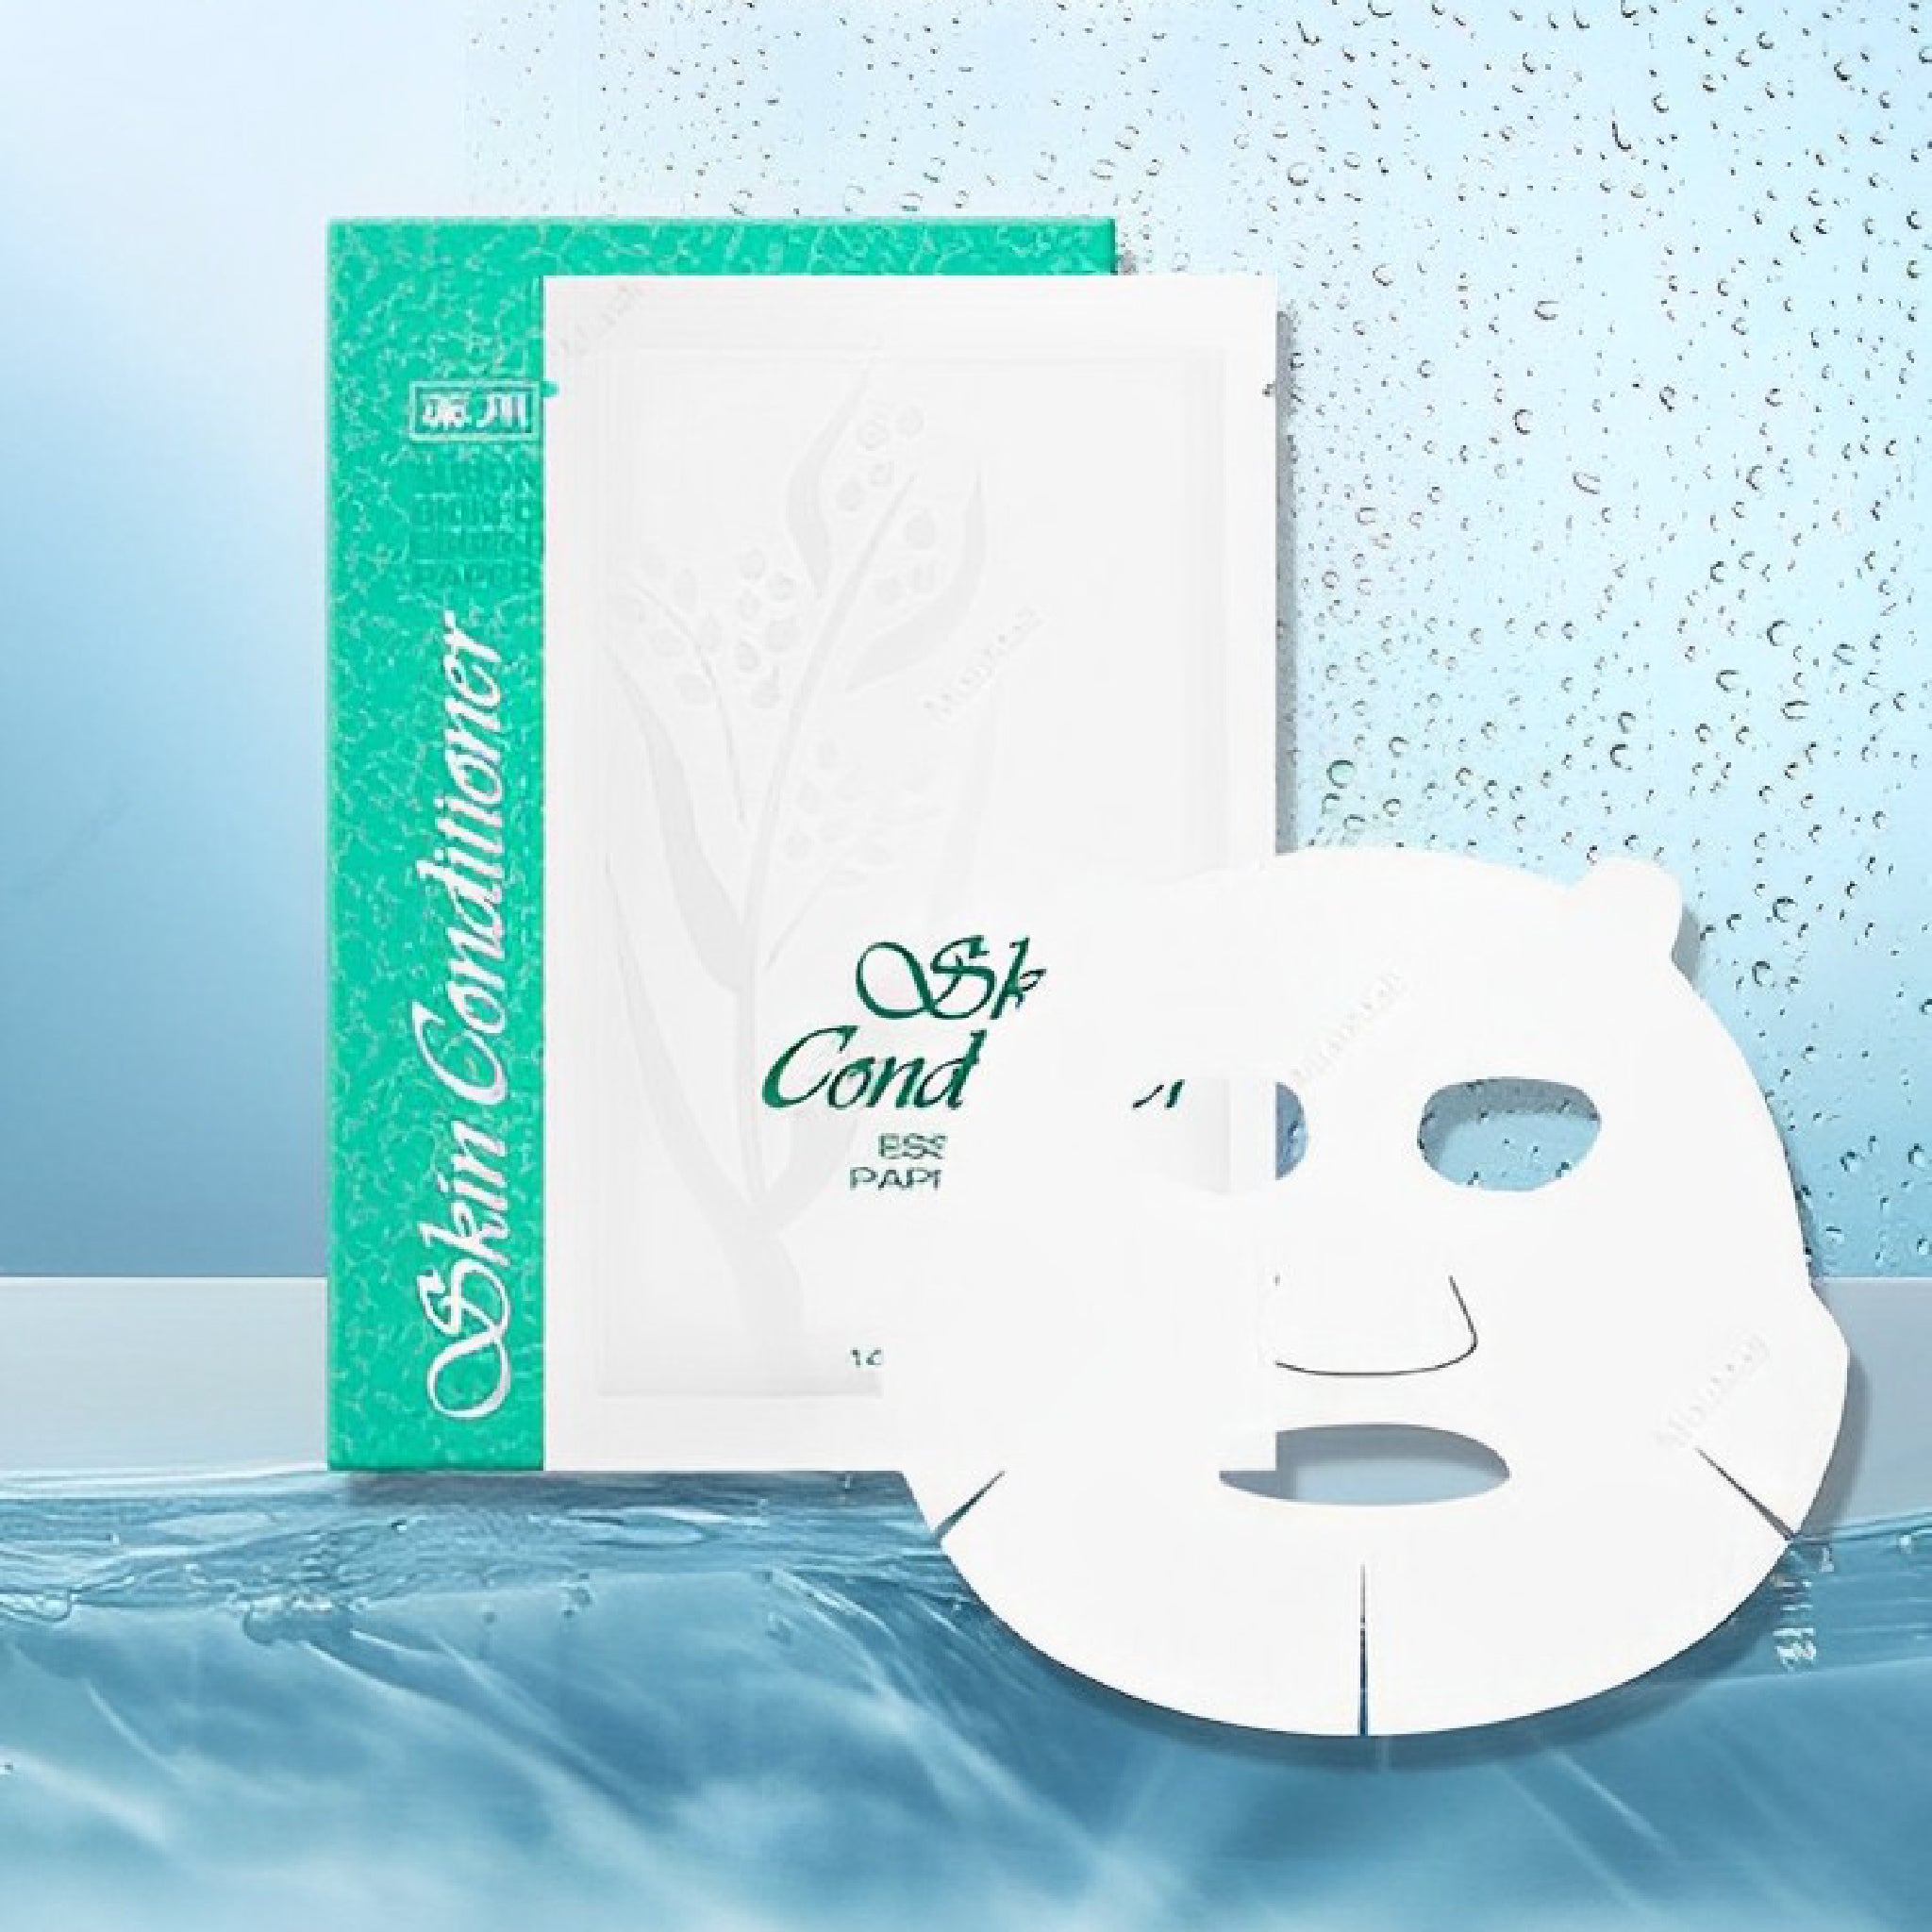 ALBION Skin Conditioner Essential Paper Mask